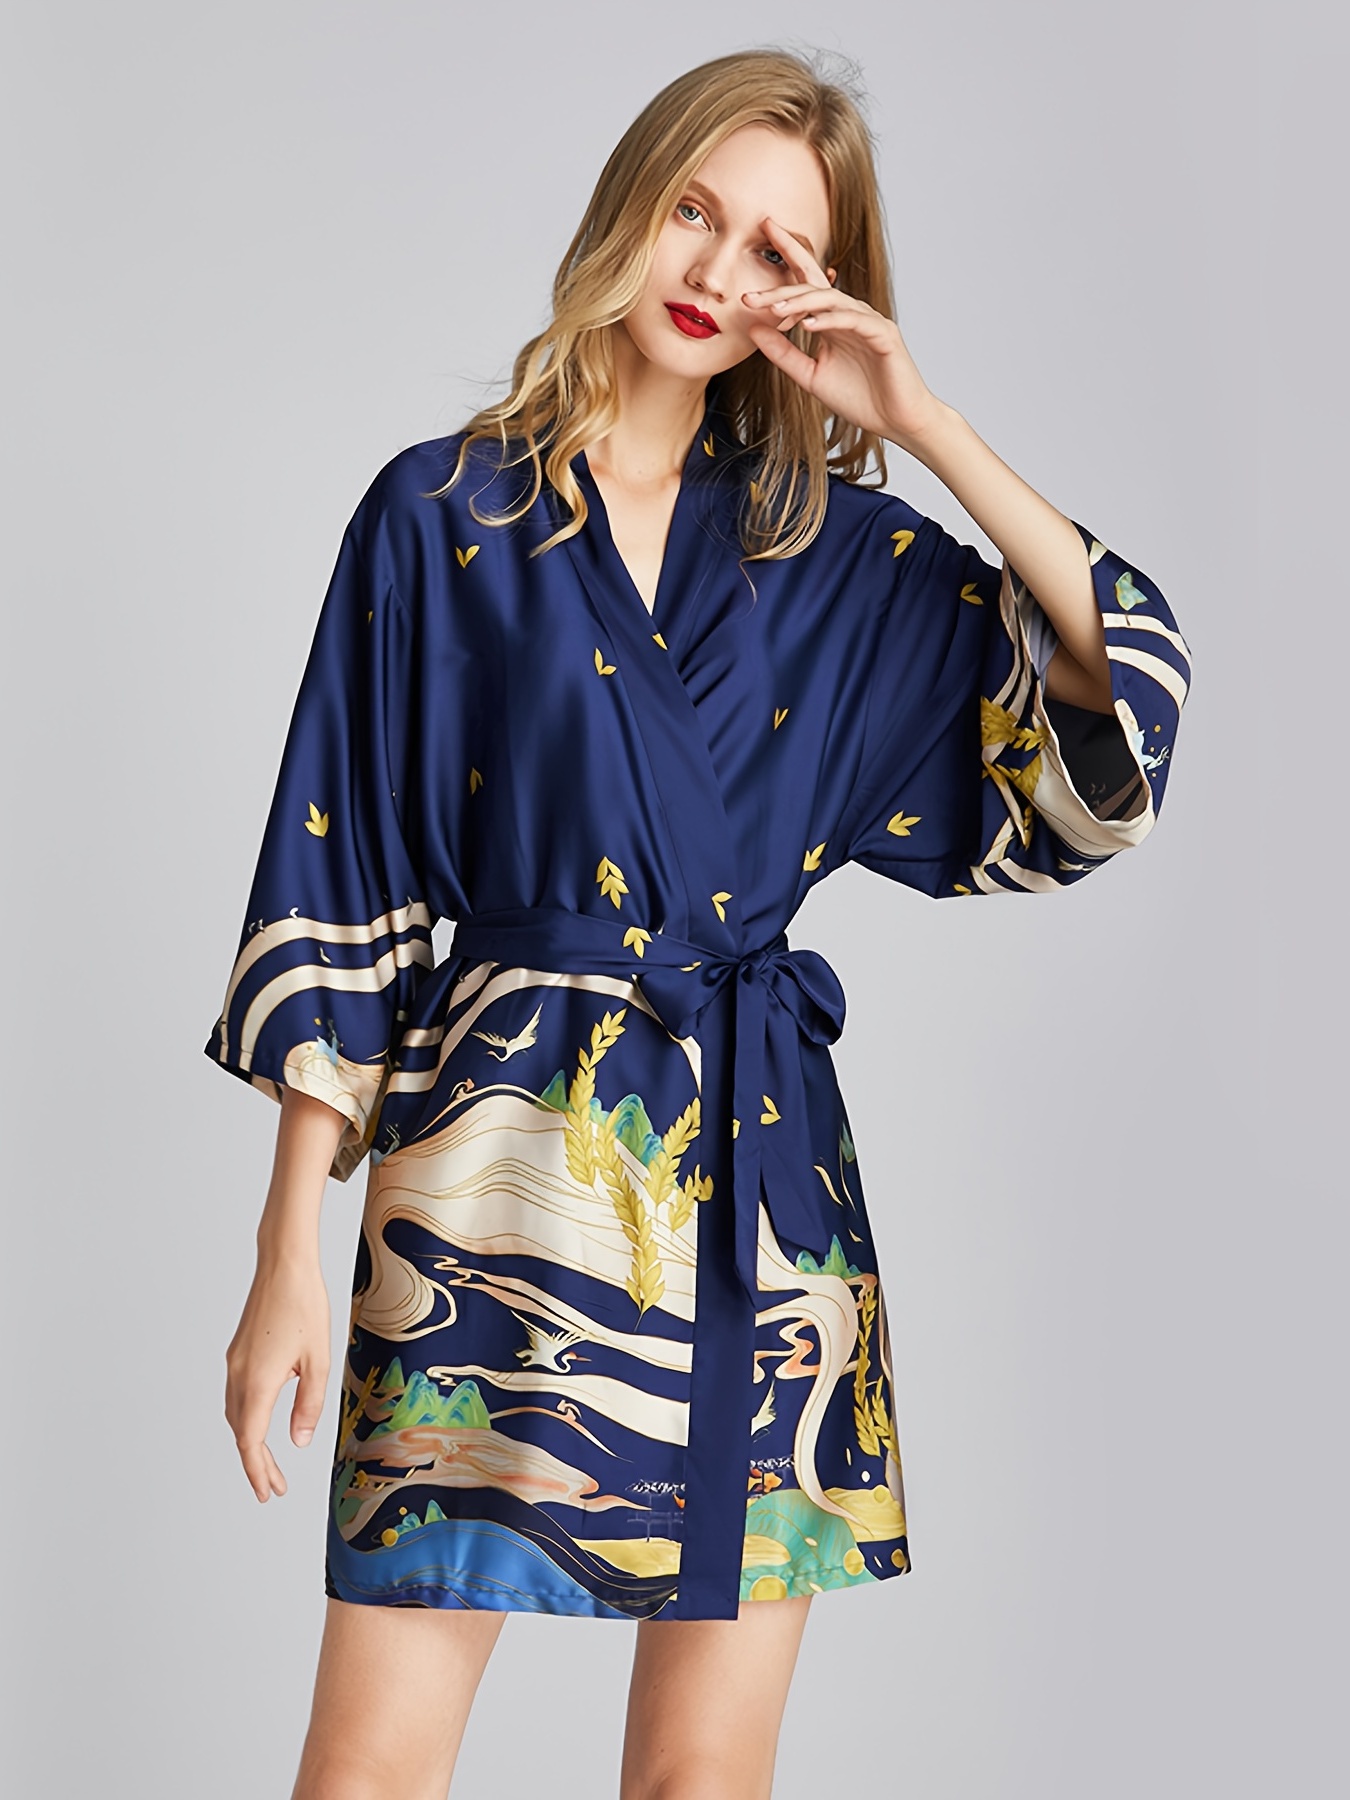 Buy Wholesale China Women's Sleeping Robe Set Pajamas Women